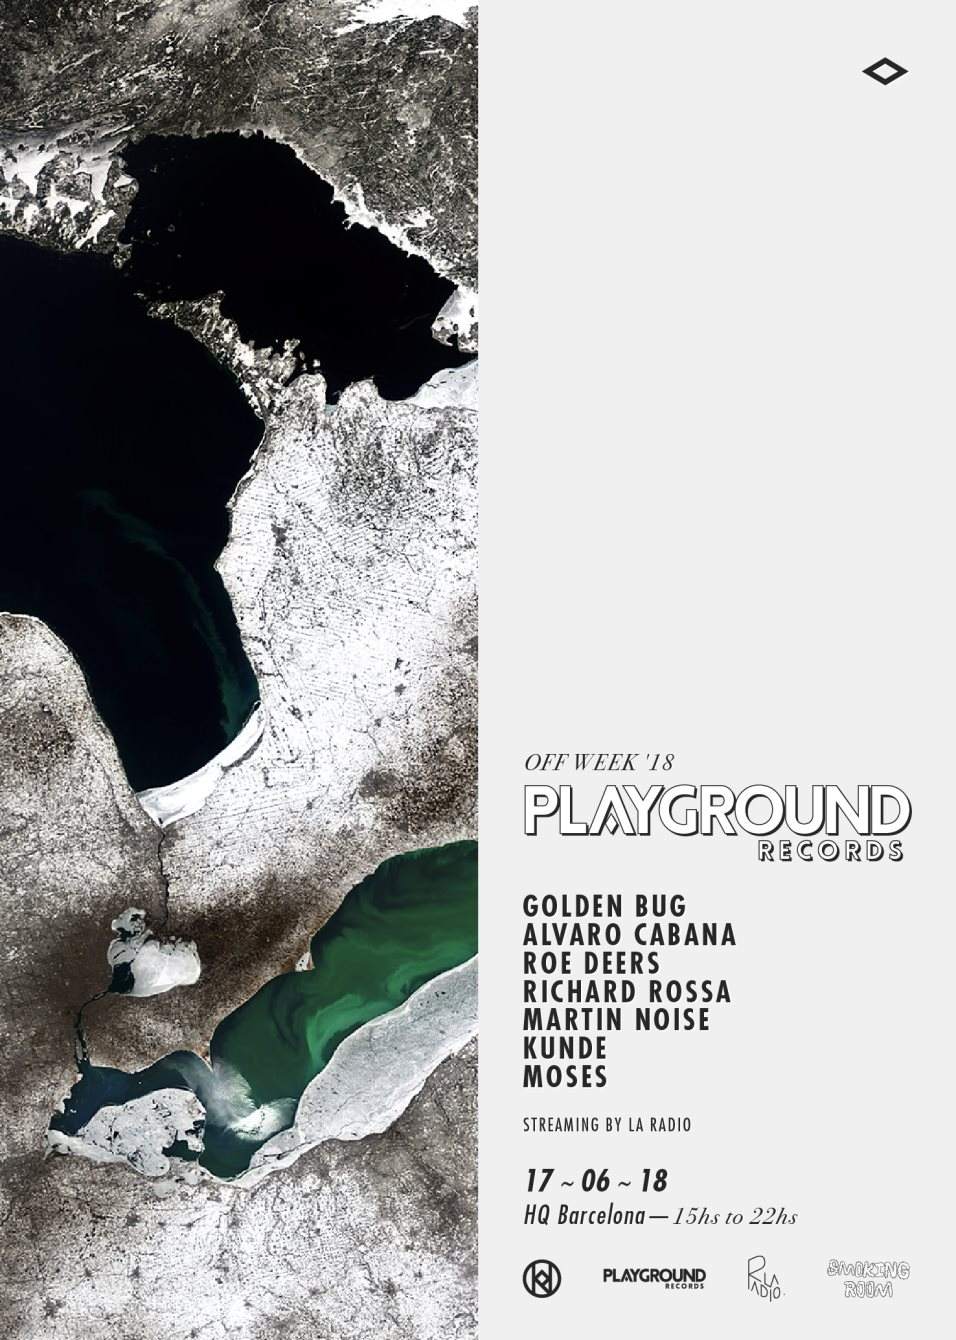 Playground Records - Off Week Streaming Showcase - by La Radio - Página trasera